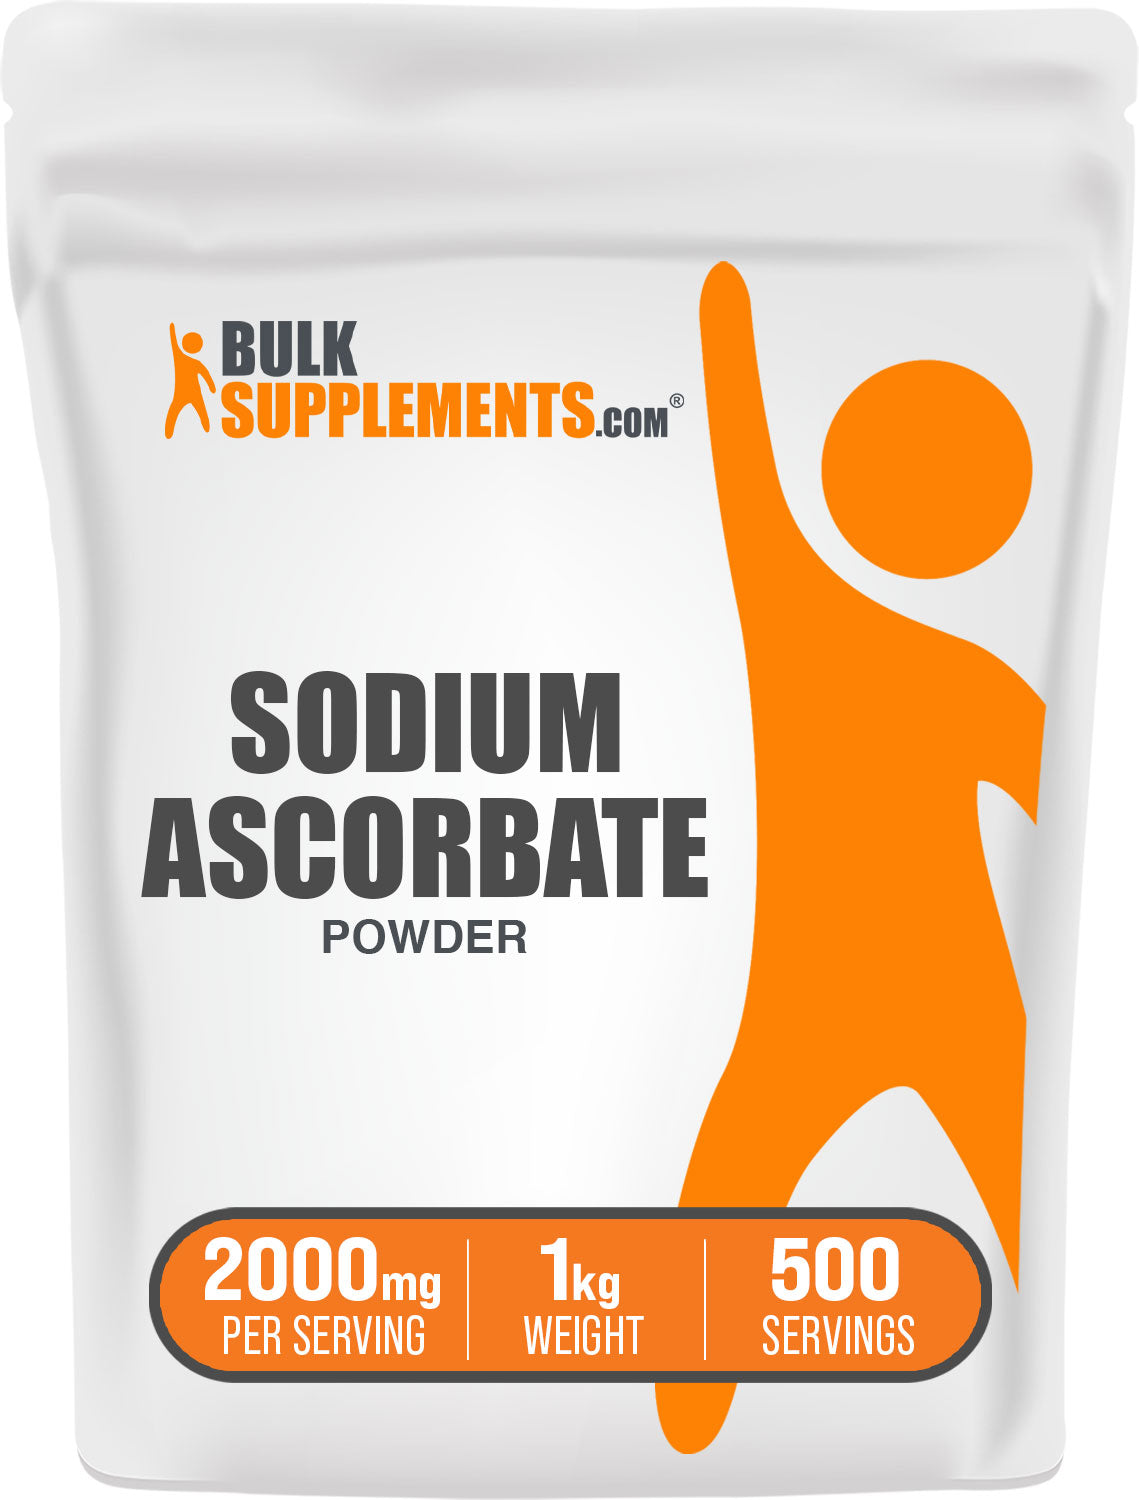 BulkSupplements.com Sodium Ascorbate Powder 1kg bag